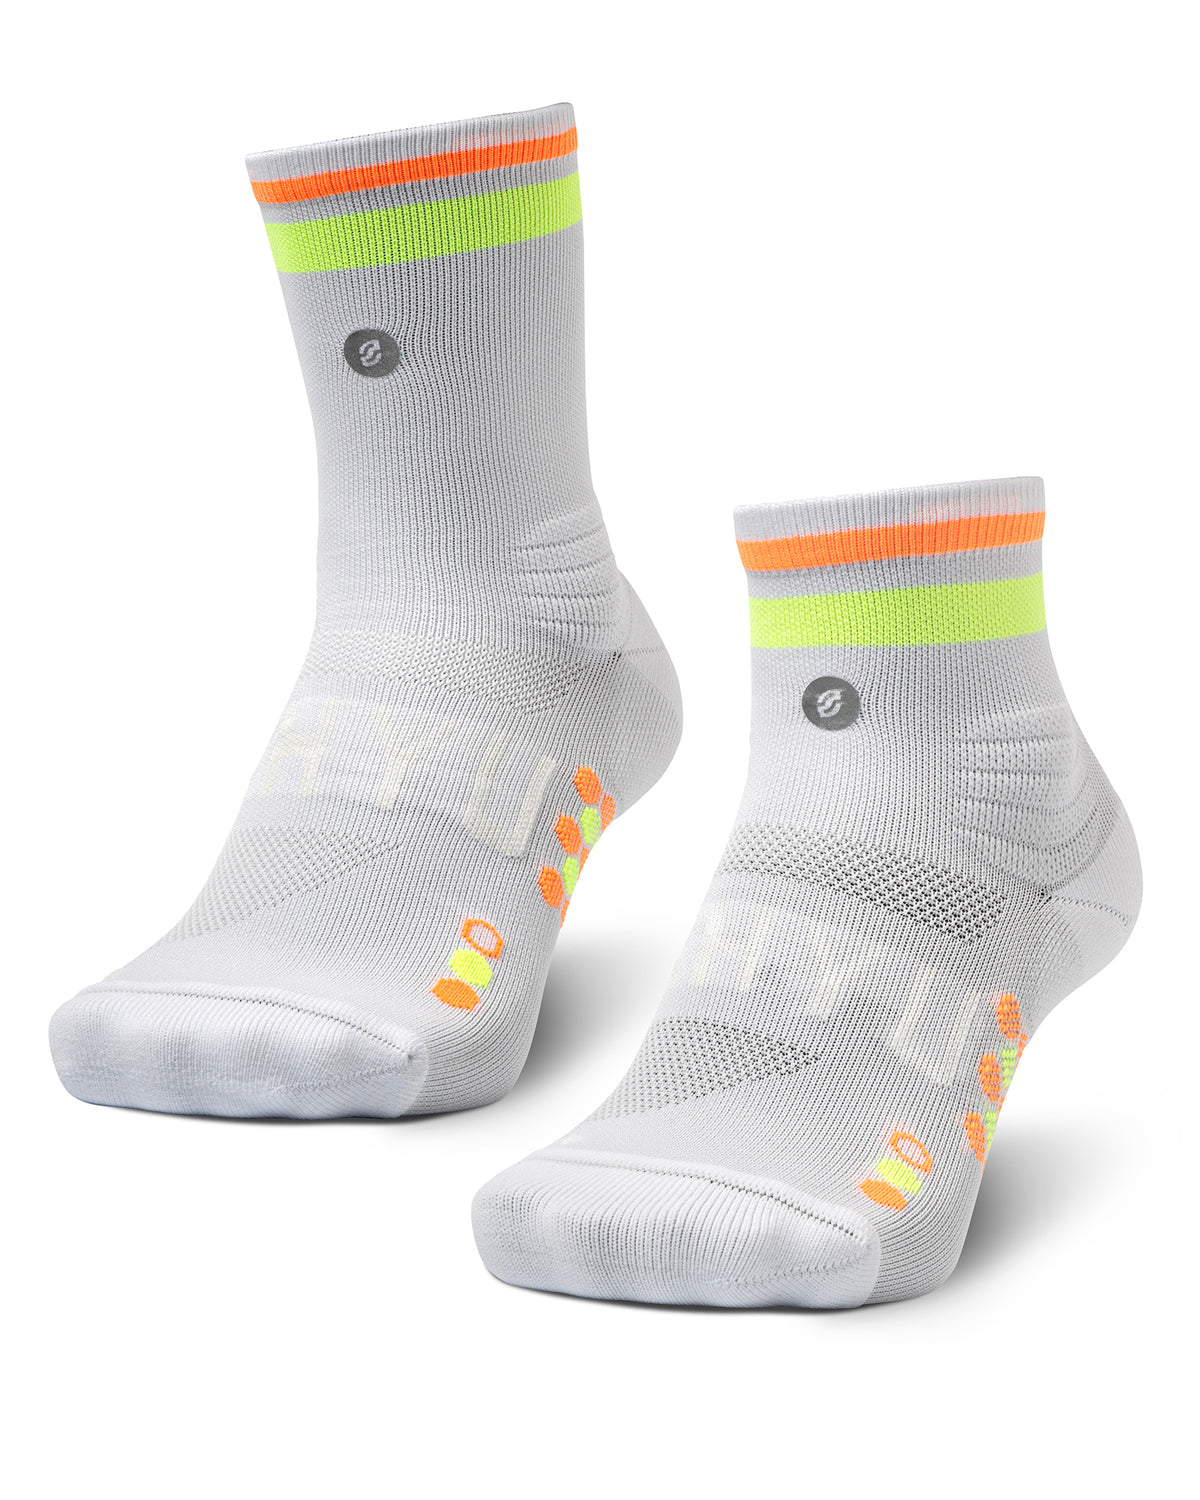 SHYU racing socks -  white | lime | mango